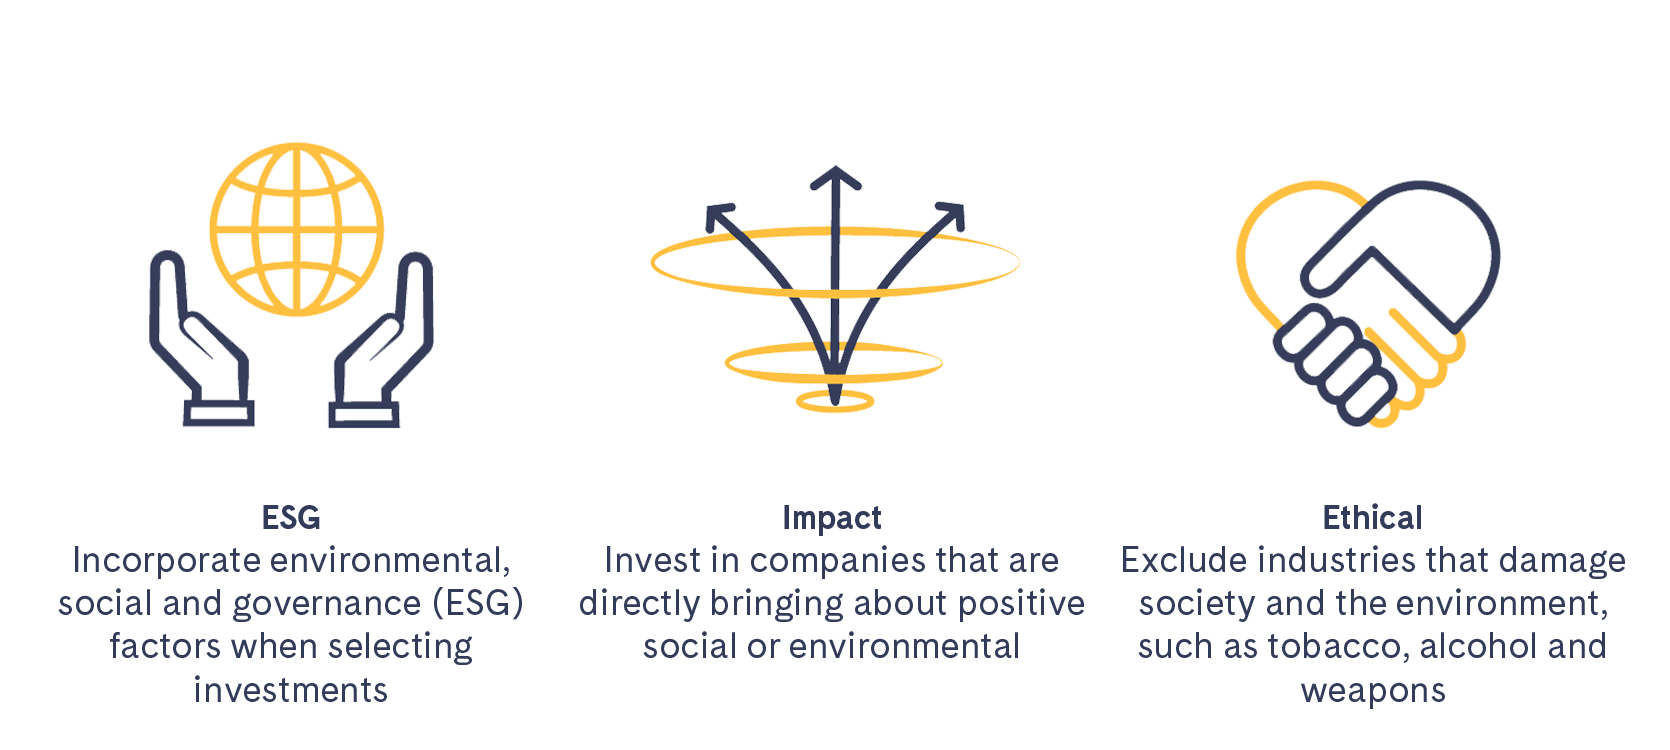 ESG, Impact, Ethical